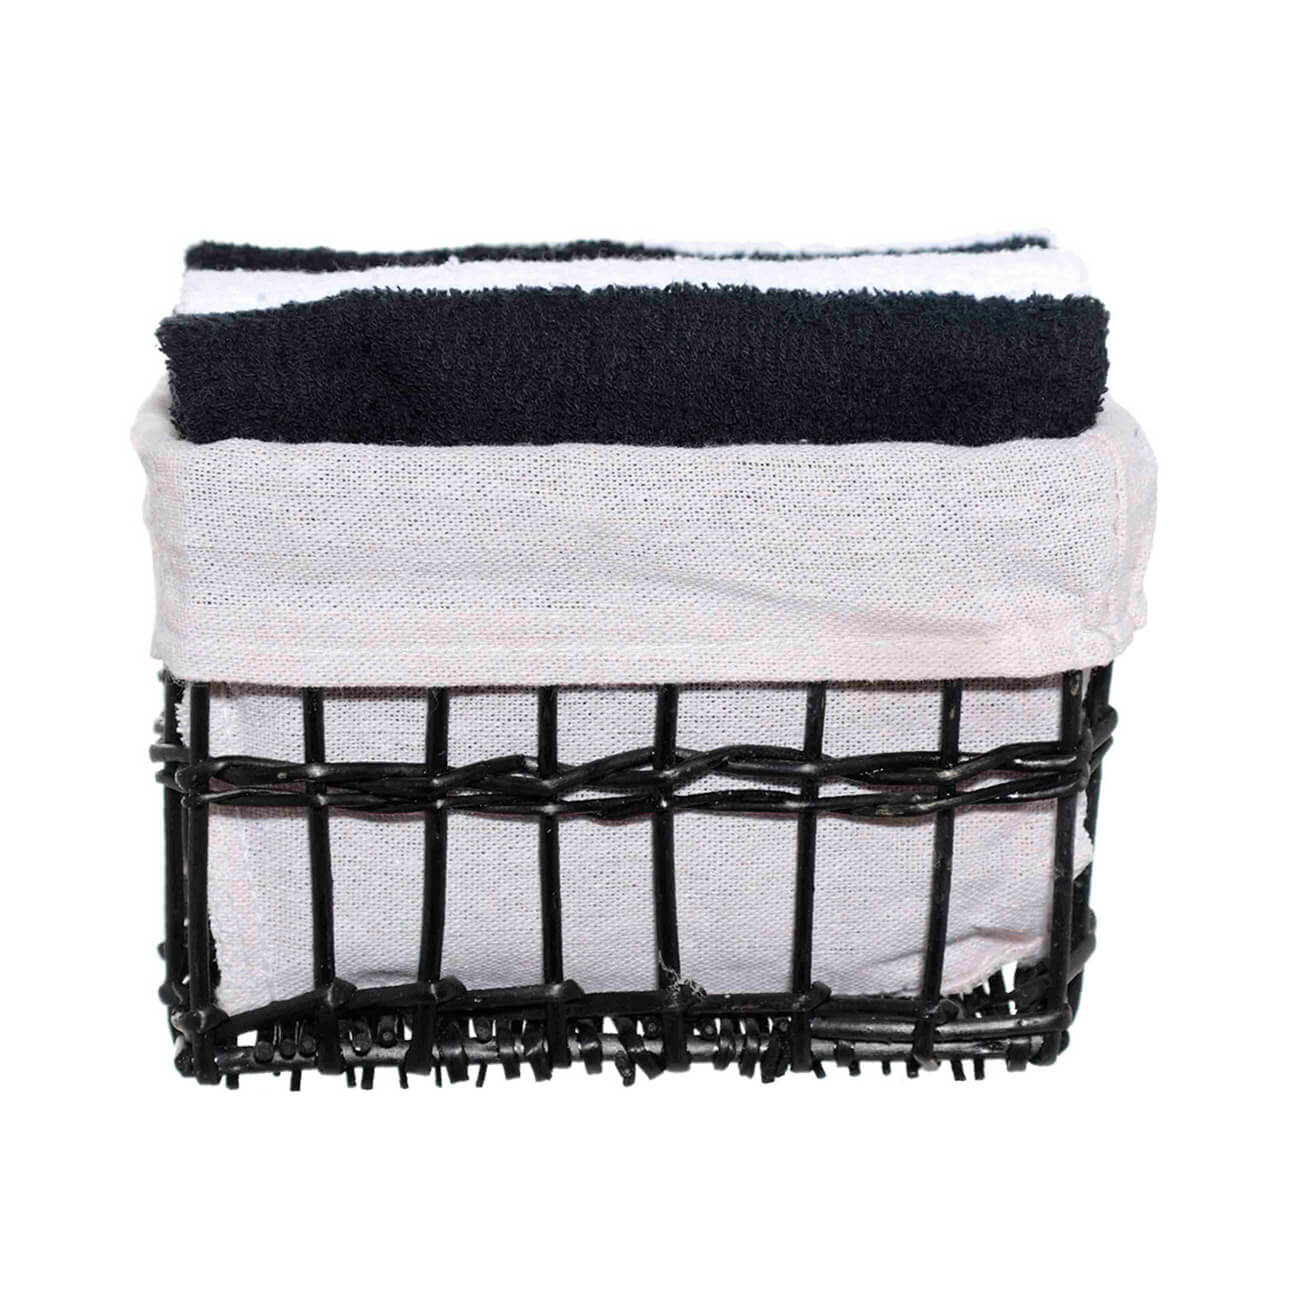 Полотенце, 30х30 см, 4 шт, в корзине, хлопок/лоза, черное/белое, Basket towel полотенце 30х30 см 4 шт в корзине хлопок целлюлоза серое белое basket towel